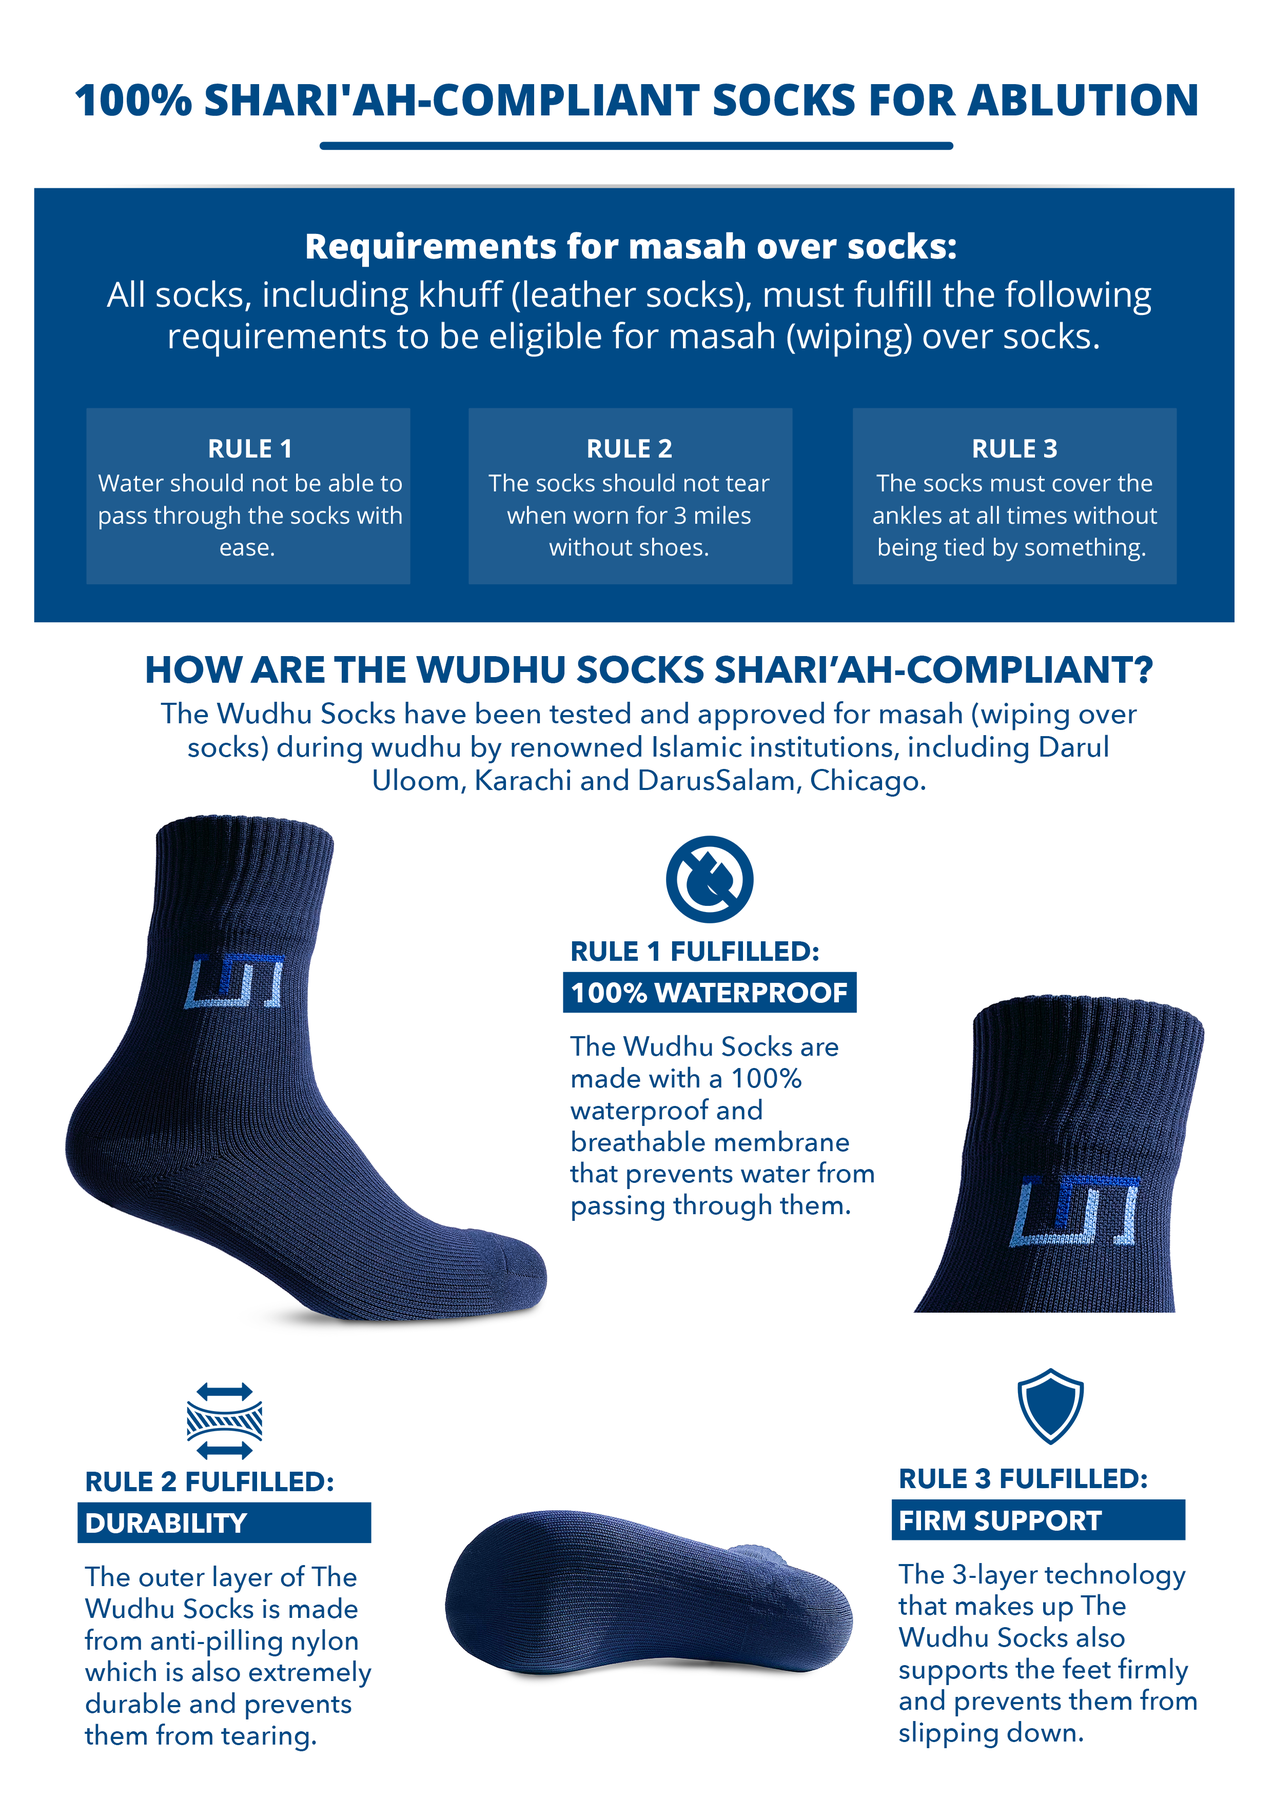 Are the wudhu socks sharia compliant? Can I do masah on socks?